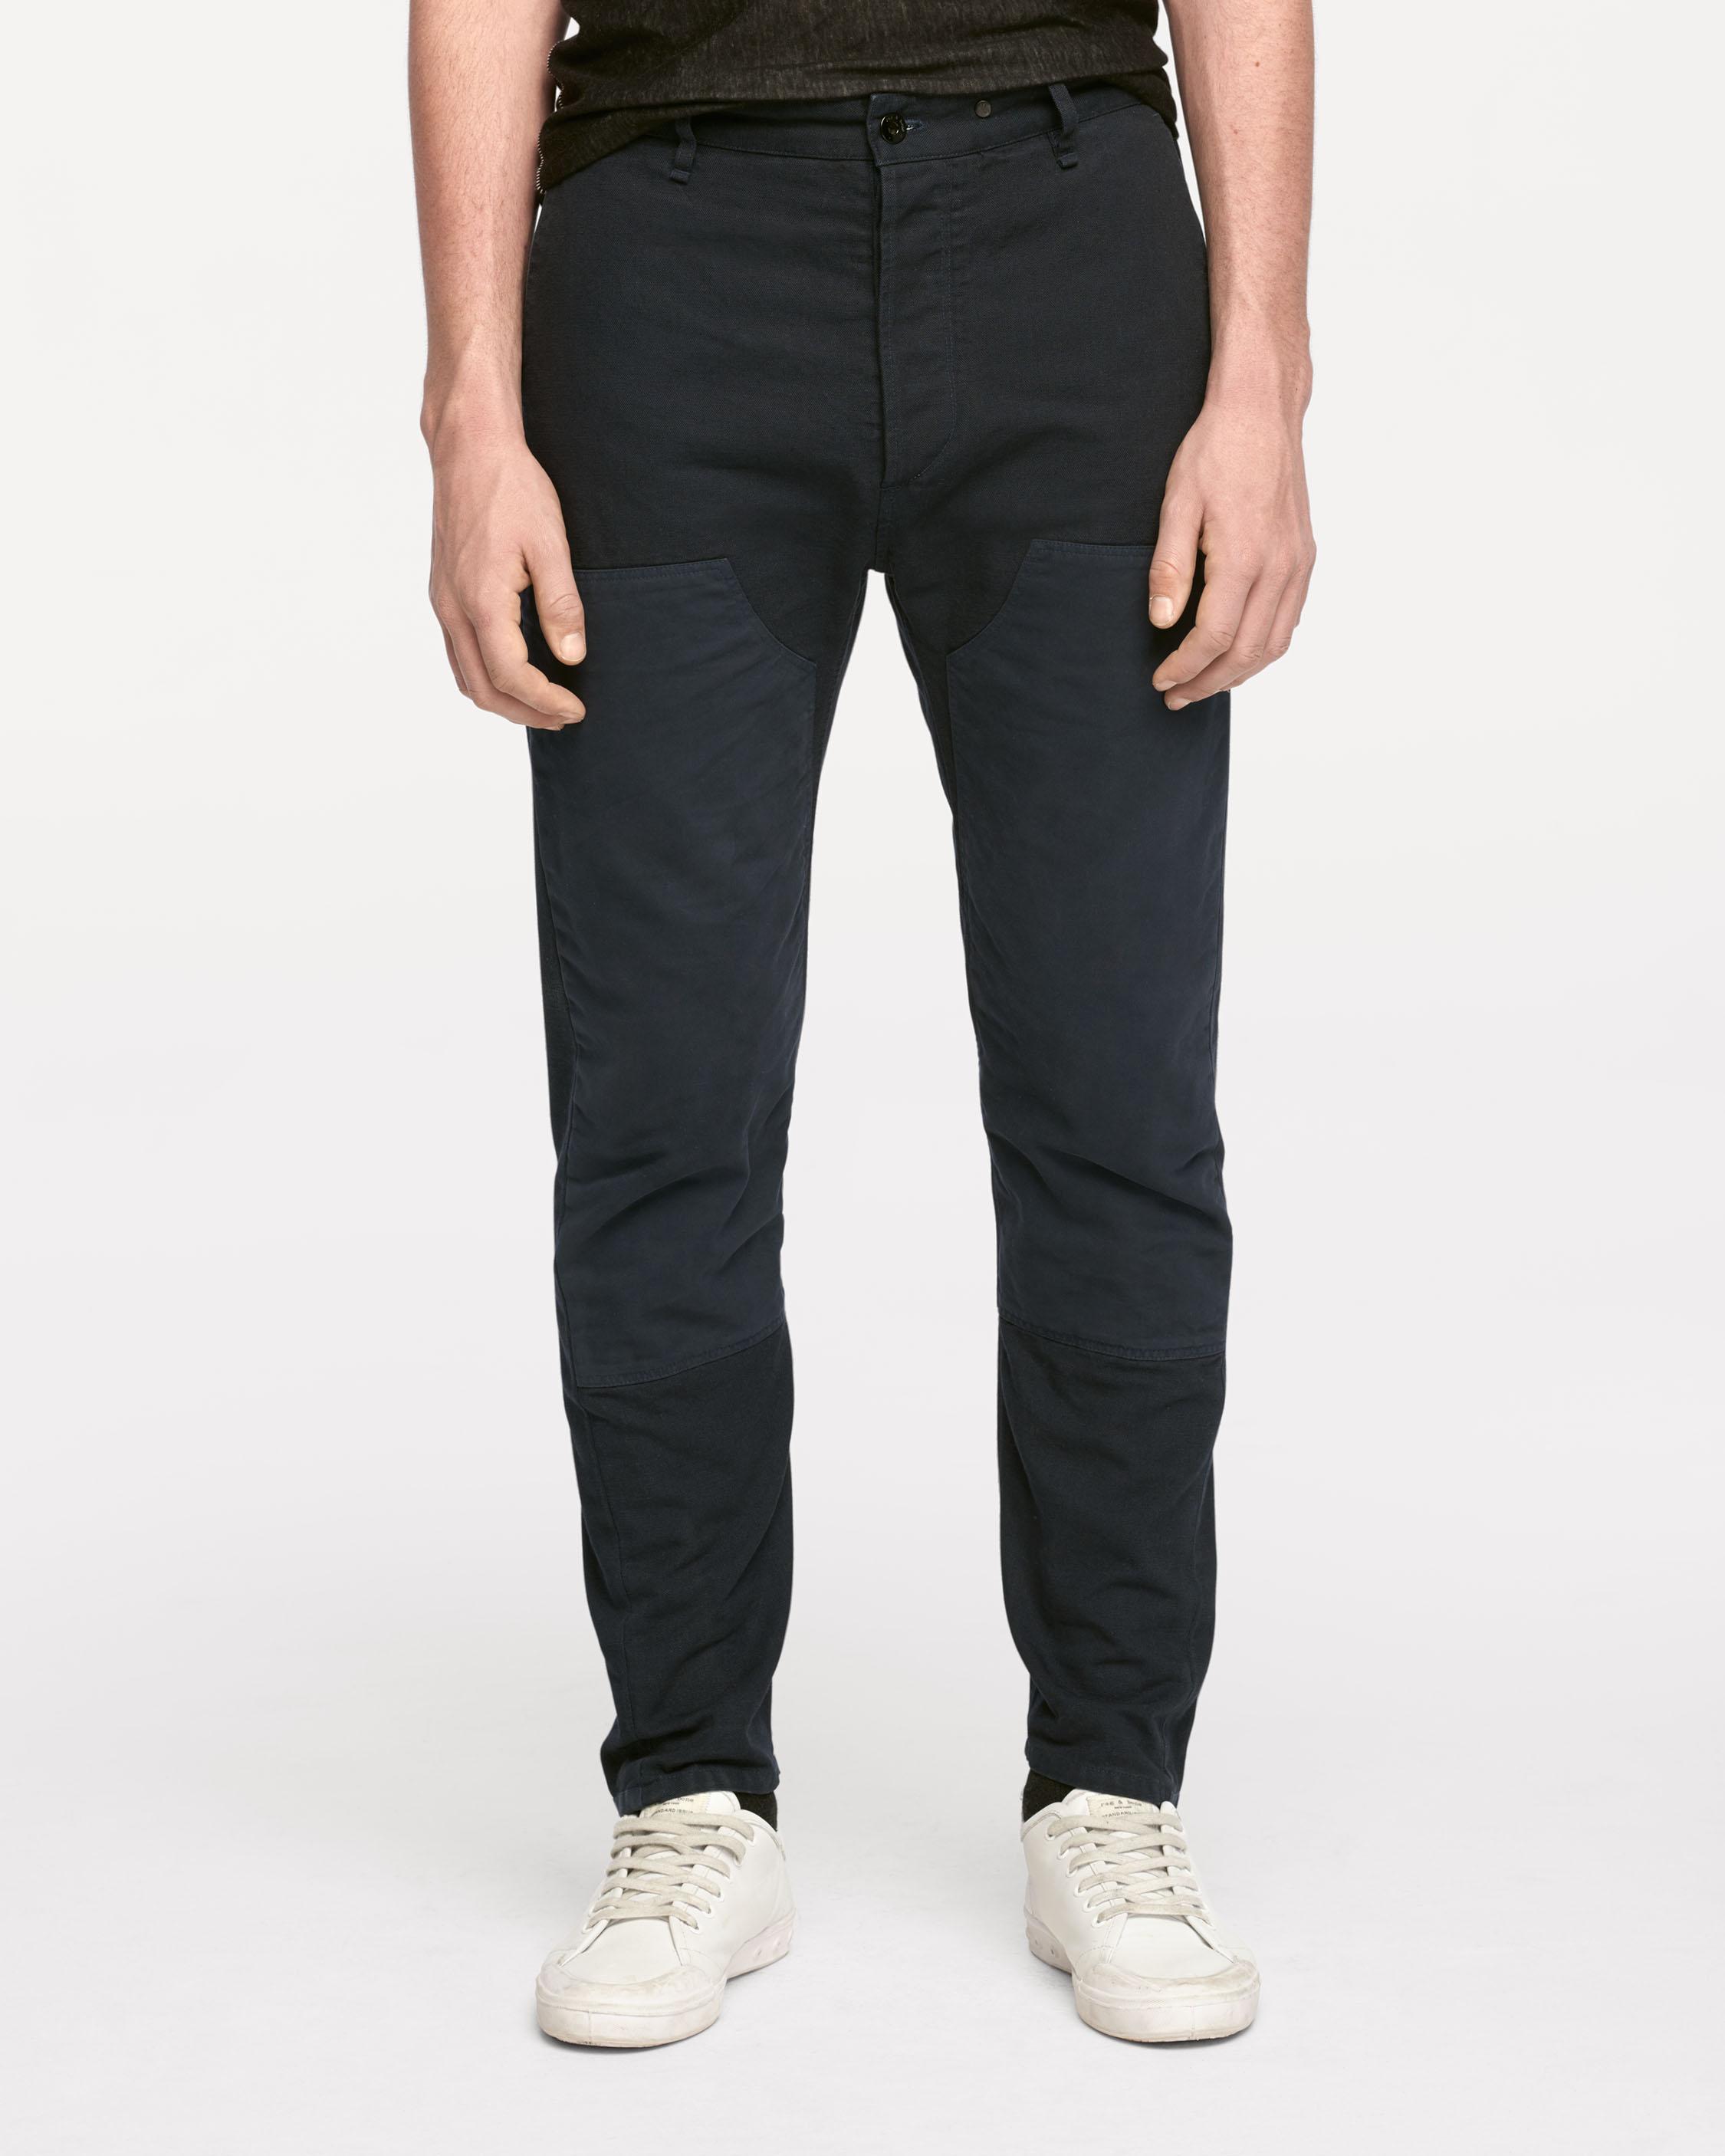 Engineered Workwear Chino | Men Pants & Shorts | rag & bone